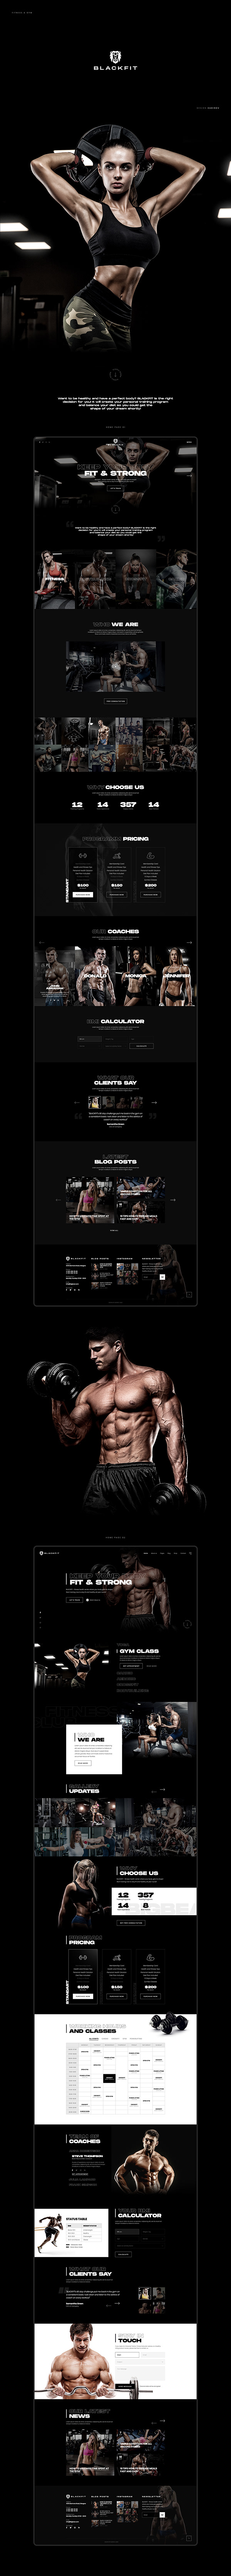 BLACKFIT - Fitness & Gym Club Website Design